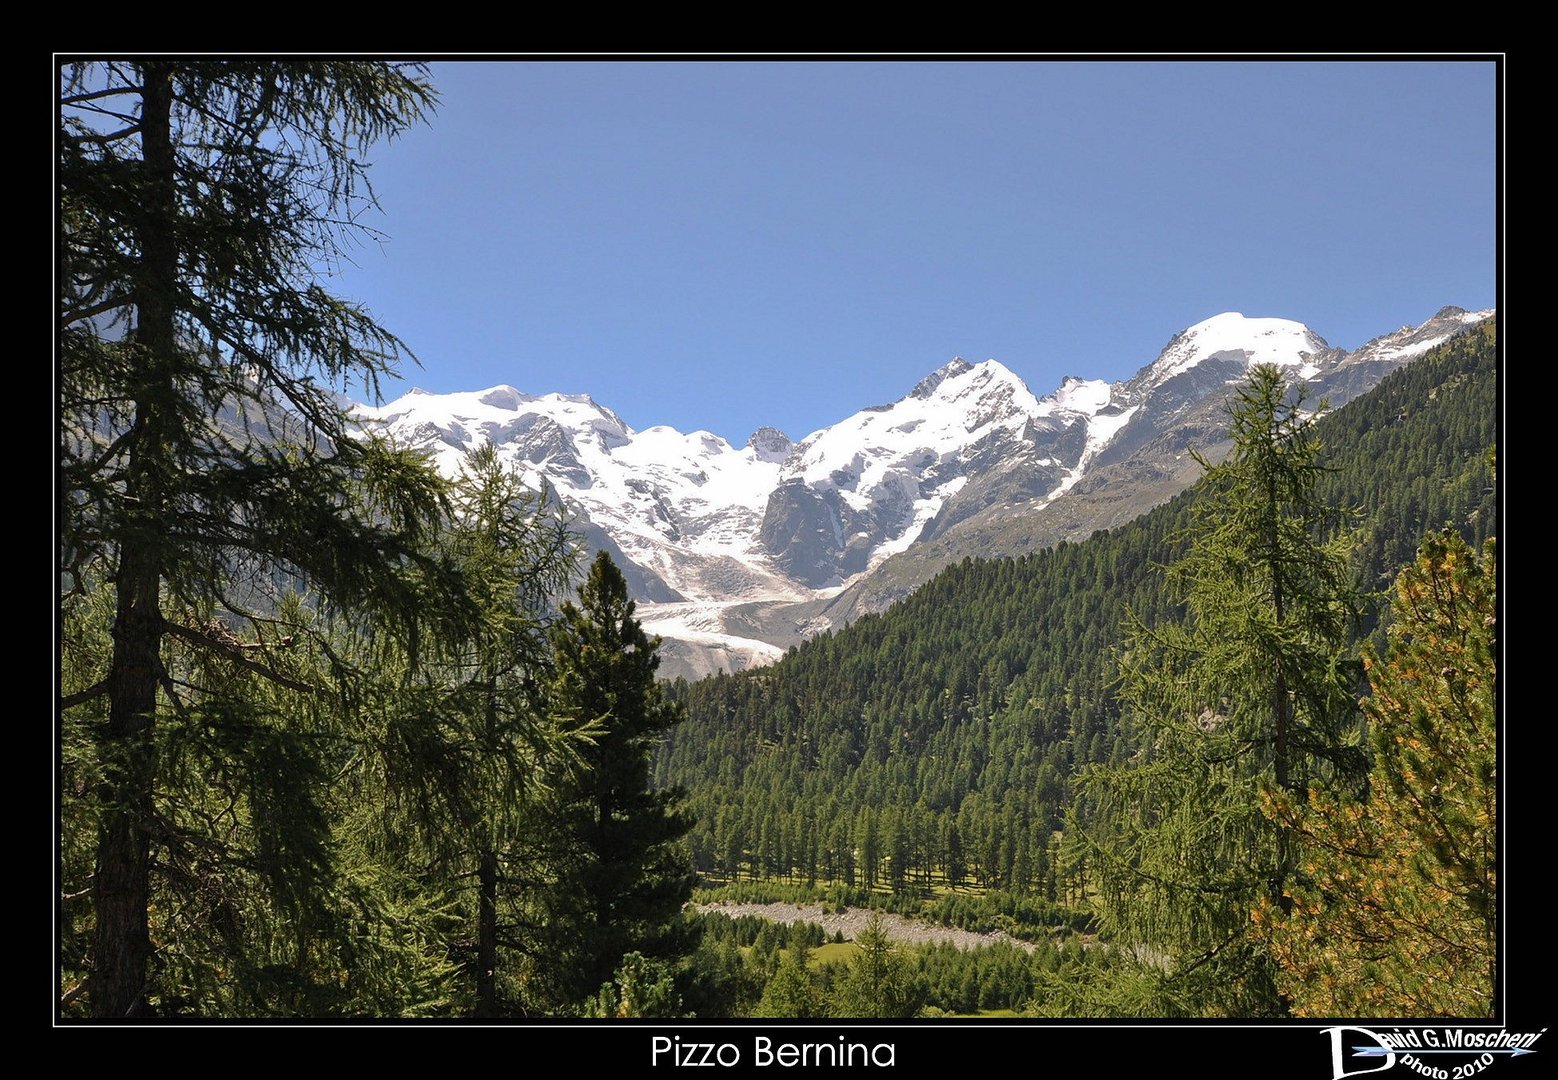 Pizzo Bernina